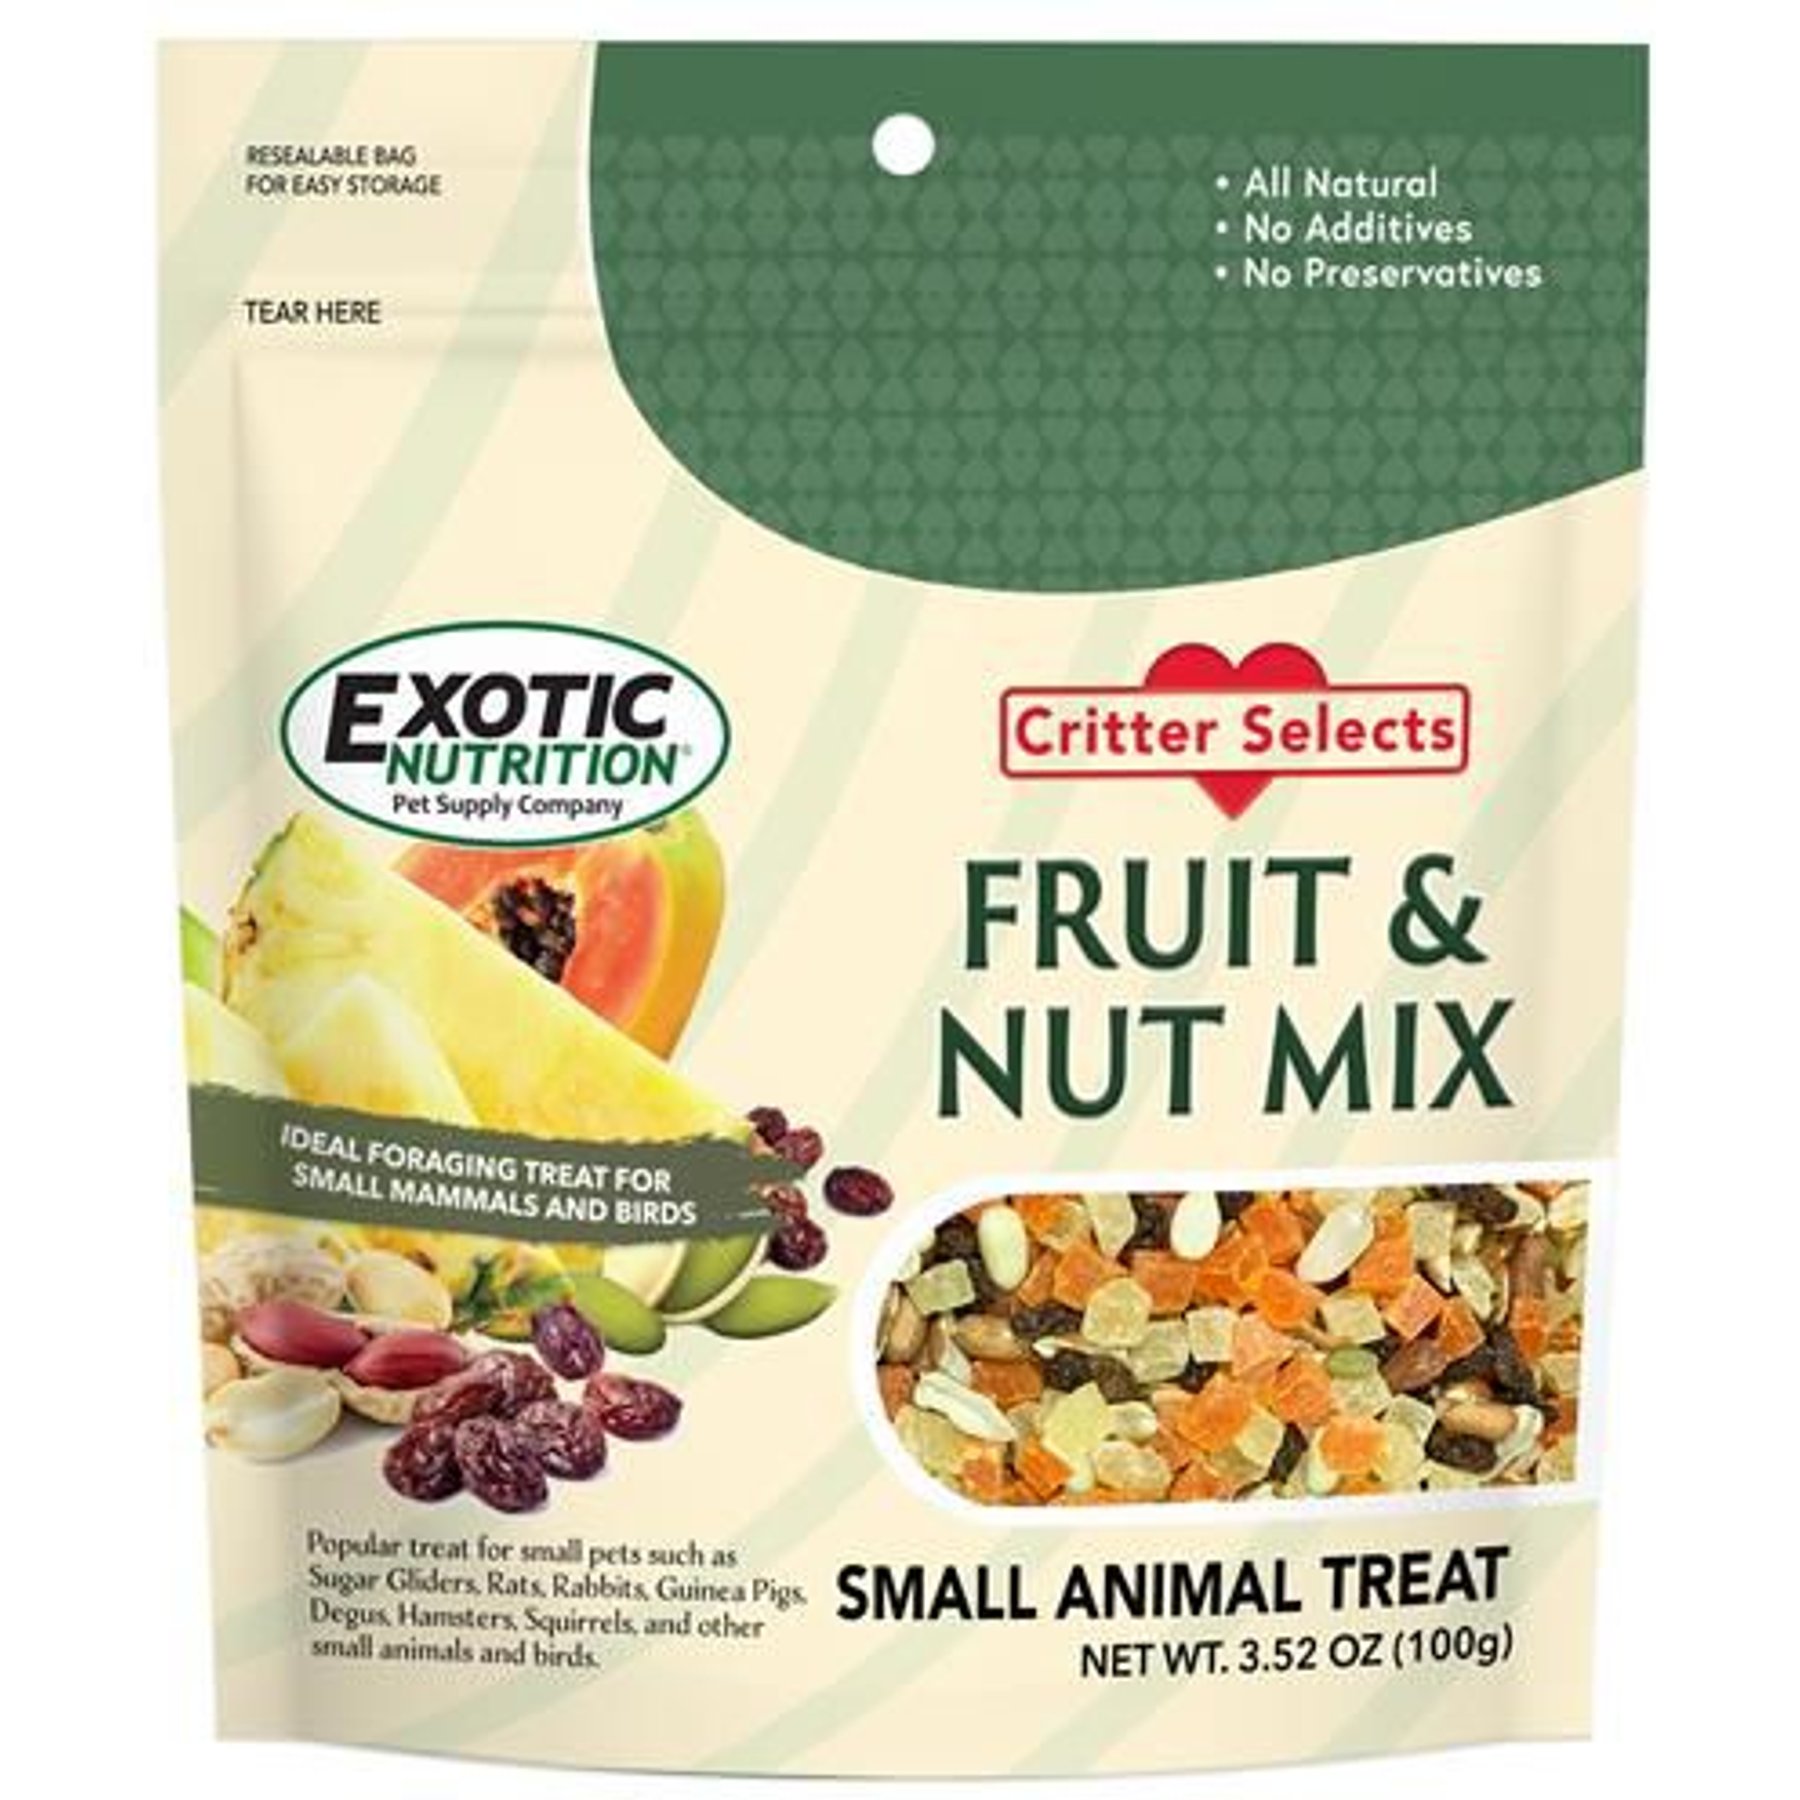 VITAKRAFT Crunch Sticks Wild Berry & Honey Guinea Pig Chewable Treats,  11.25-oz bag, 3 count 